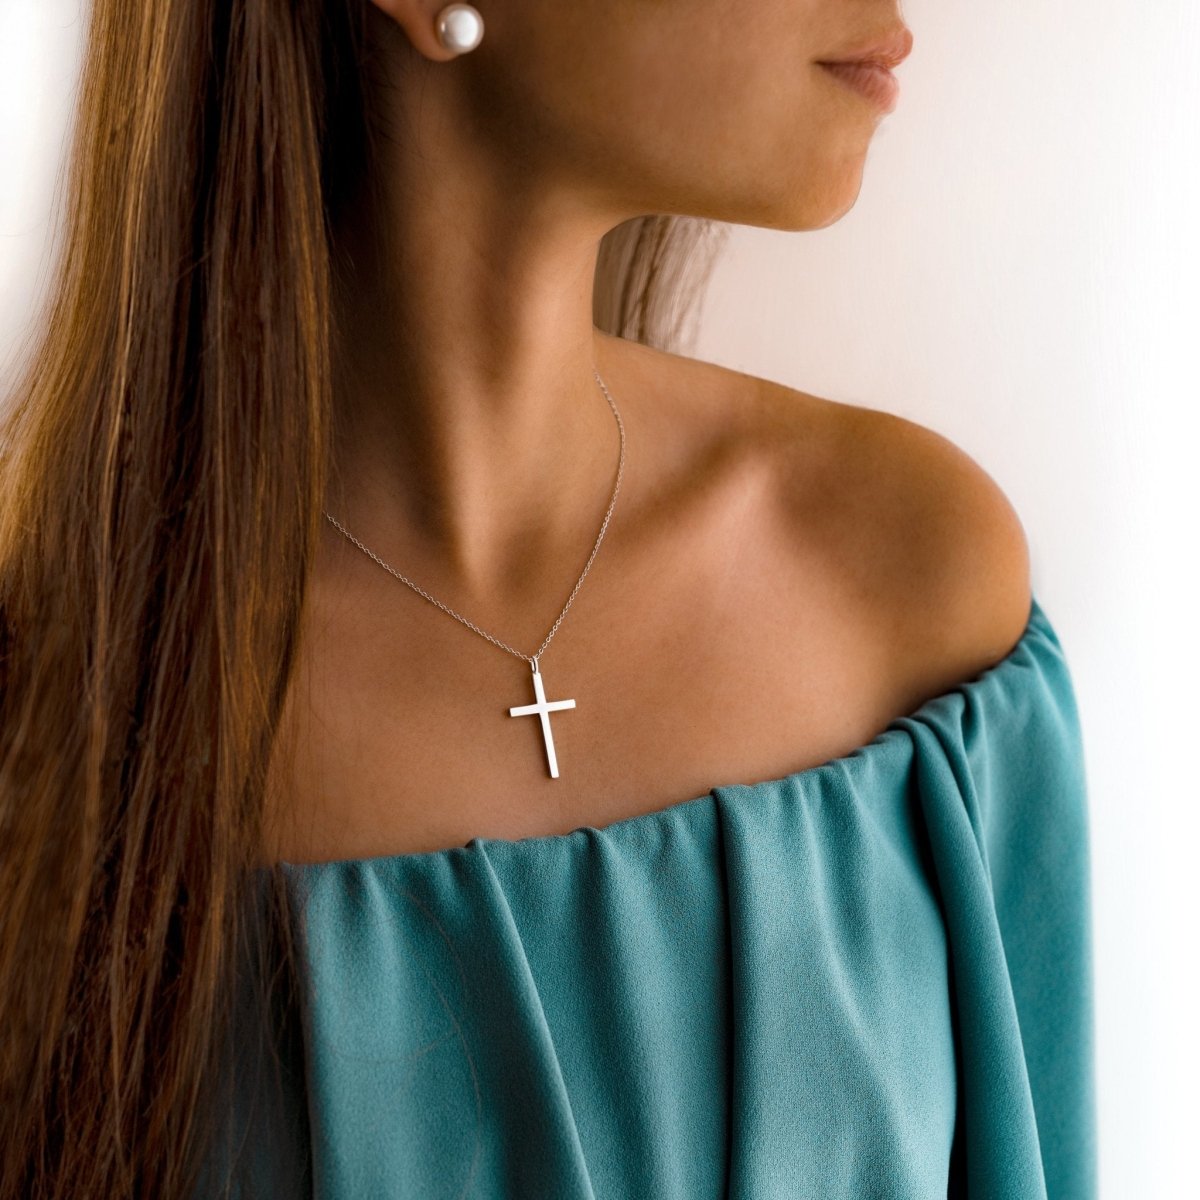 Best necklaces for your neckline - Milas Jewels Shop